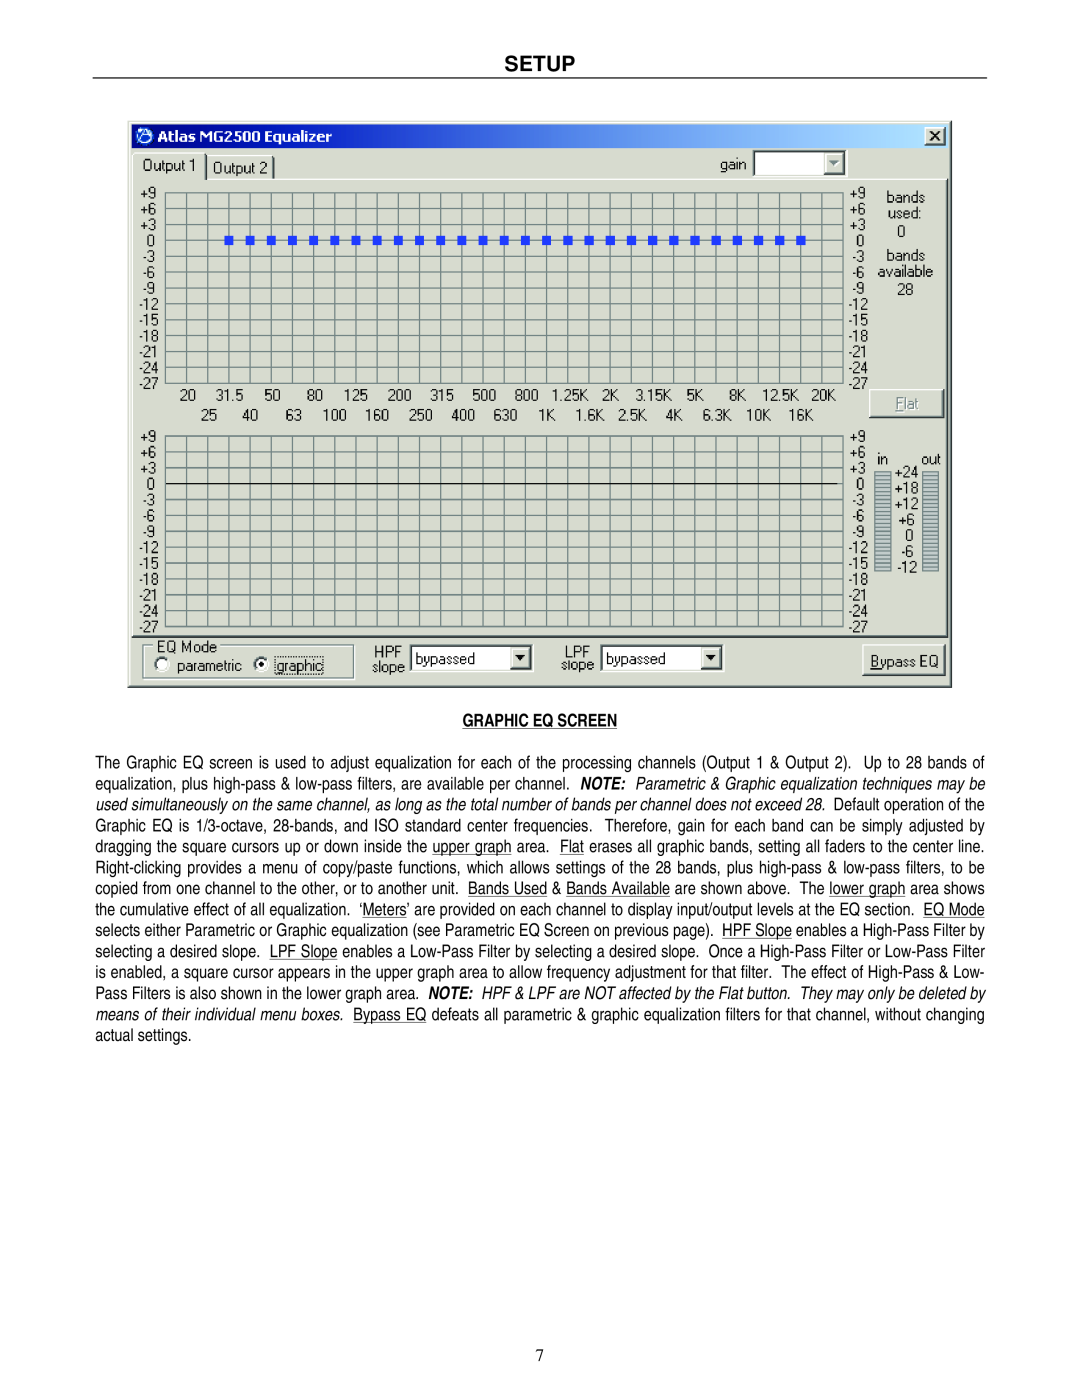 Atlas Sound MG2500 operation manual Setup, Graphic Eq Screen 